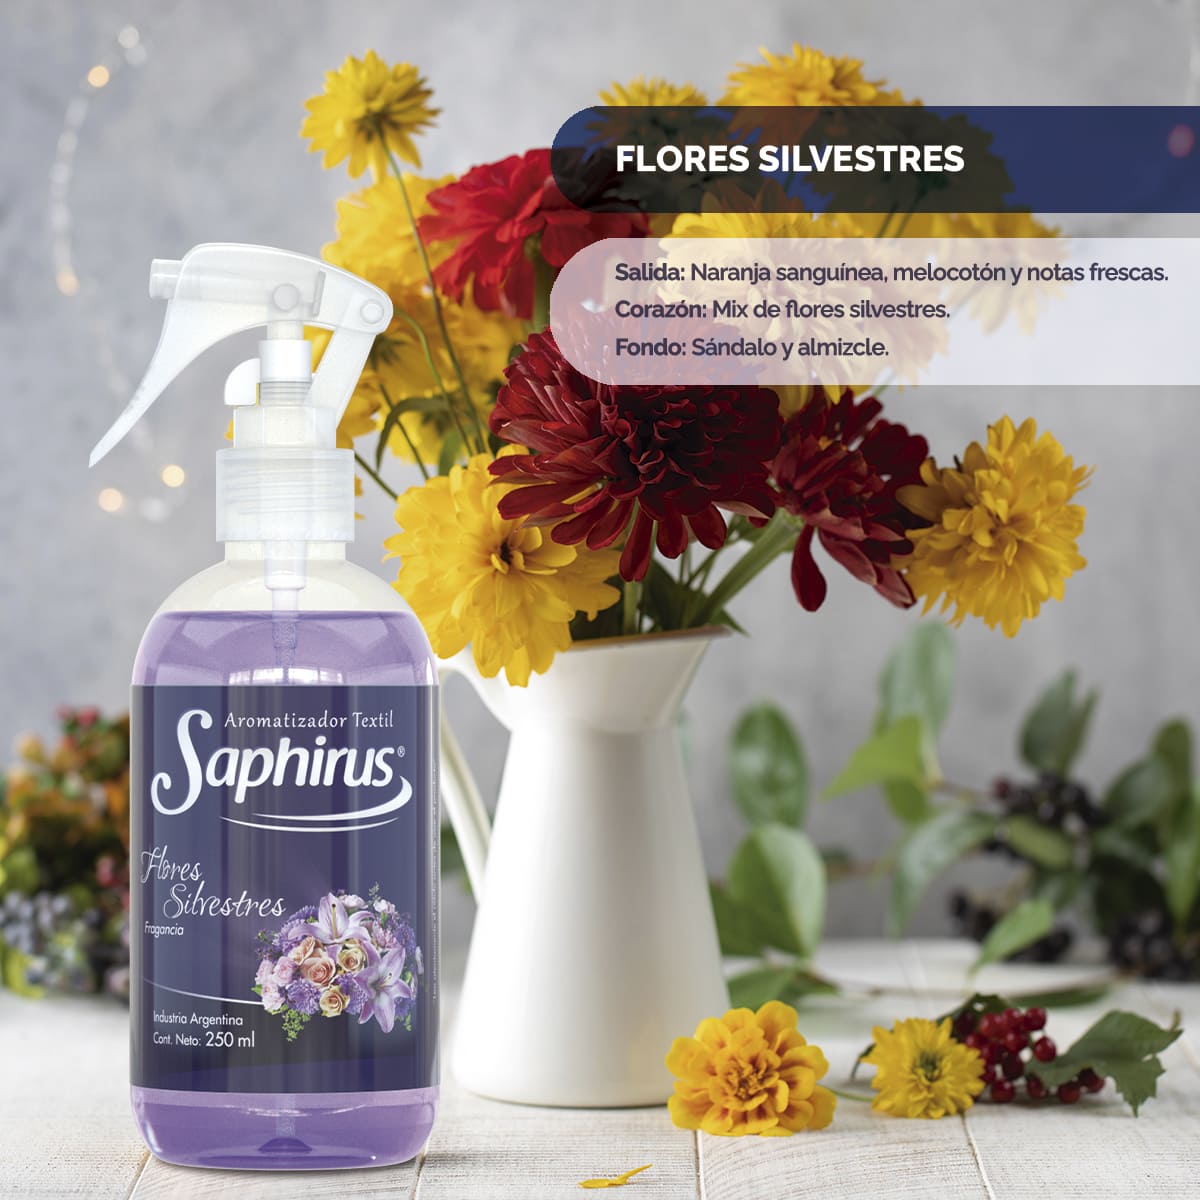 Saphirus Textil Flores Silvestres Ambientada